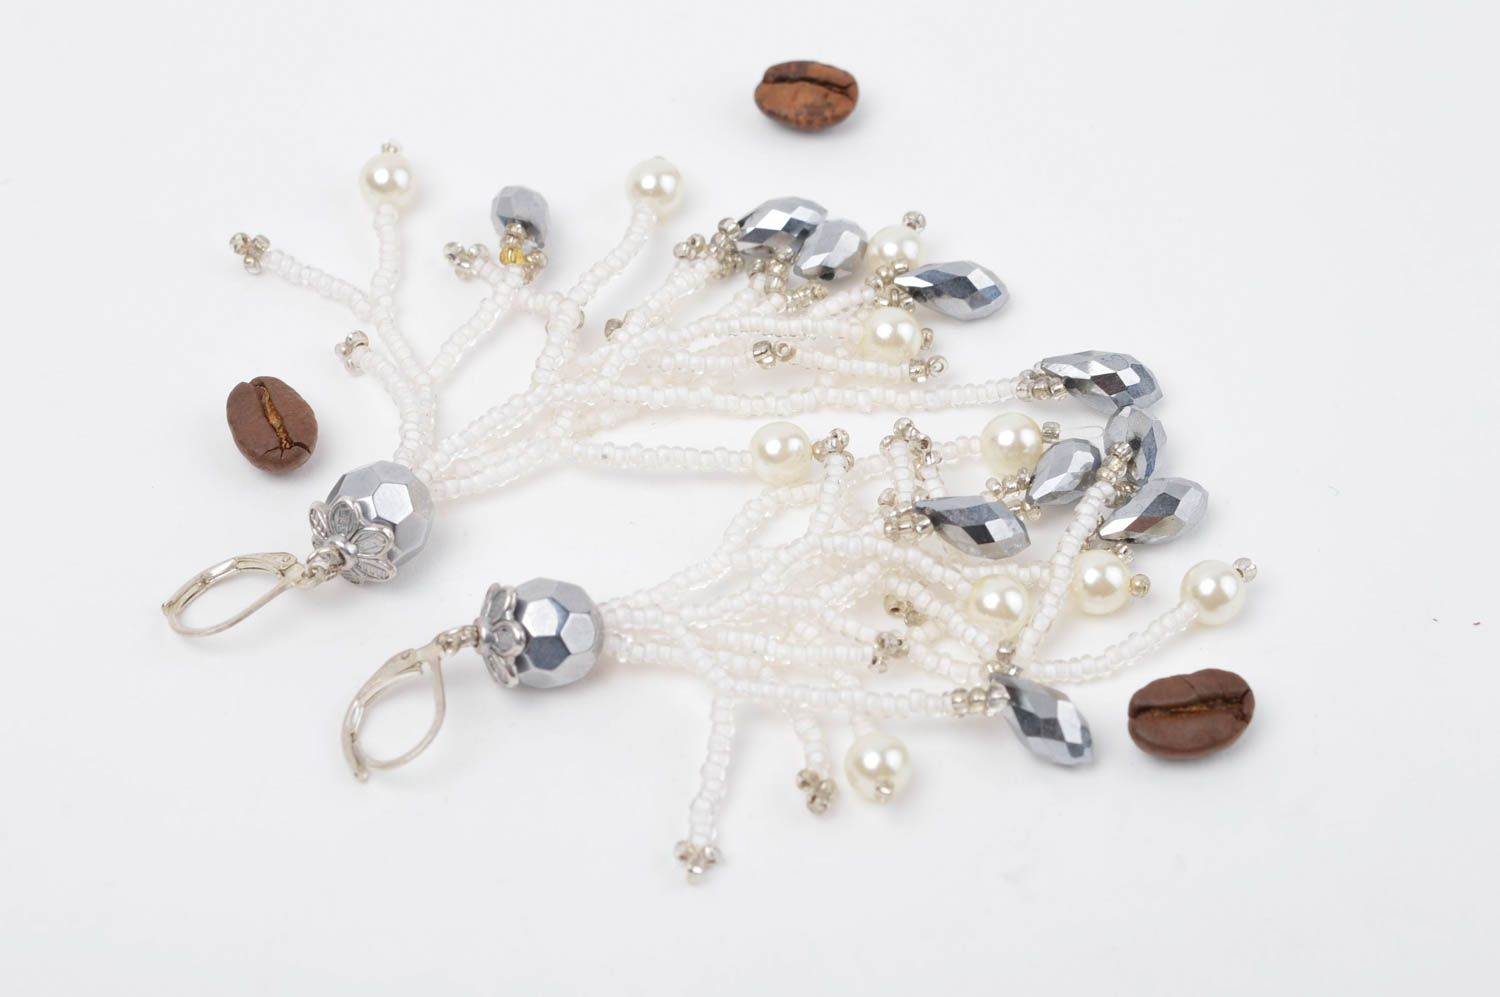 Handmade seed bead earrings seed beads jewelry long earrings with charms photo 1